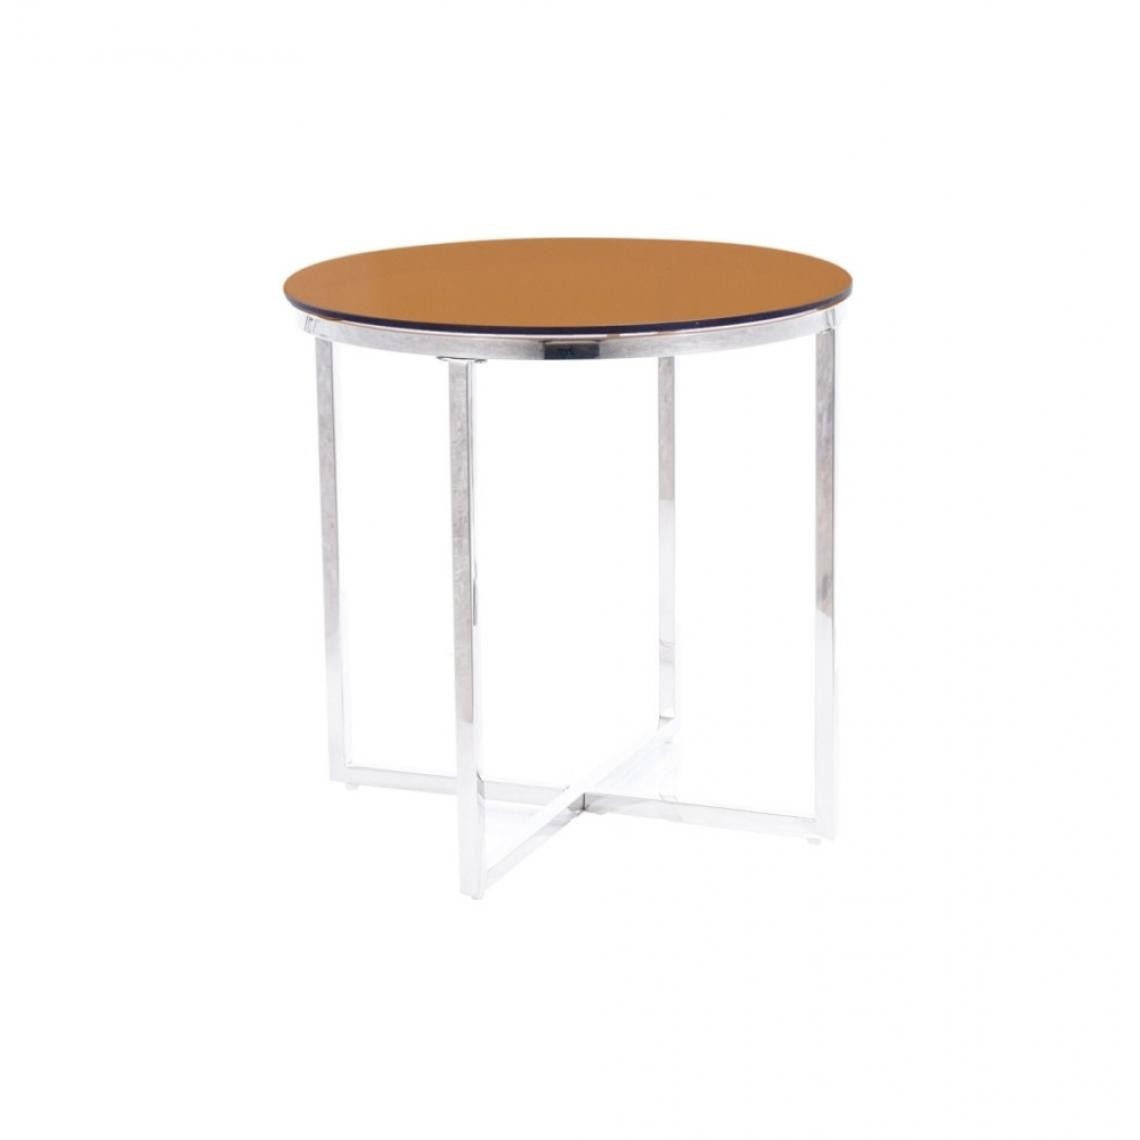 Ac-Deco - Table basse ronde - Crystal - D 55 x H 55 cm - Ambre - Tables basses